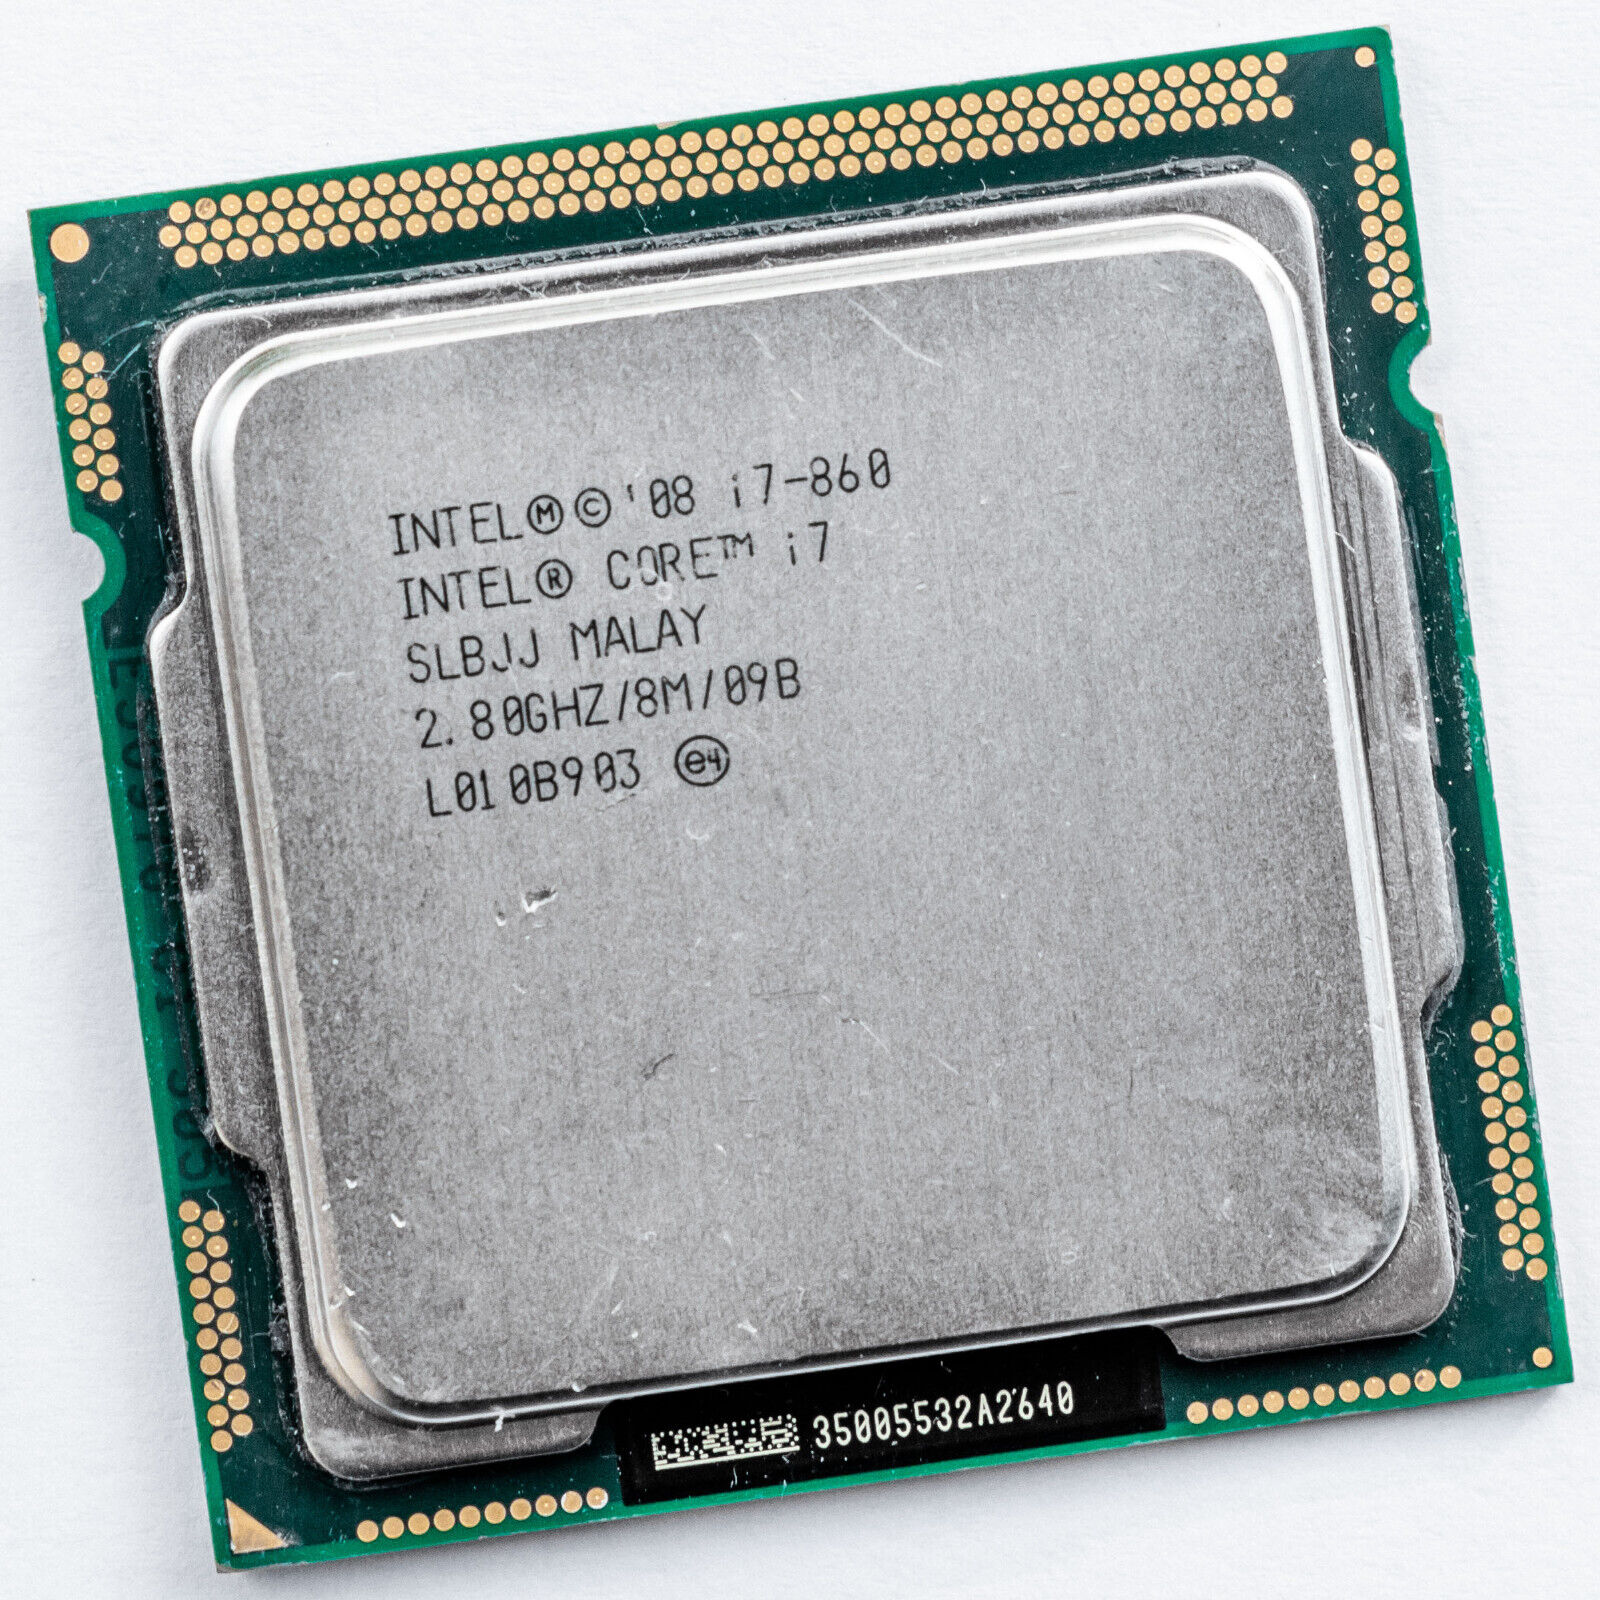 Intel Core i7-860 SLBJJ LGA1156 Quad Core Processor 2.8GHz 1st Gen Lynnfield